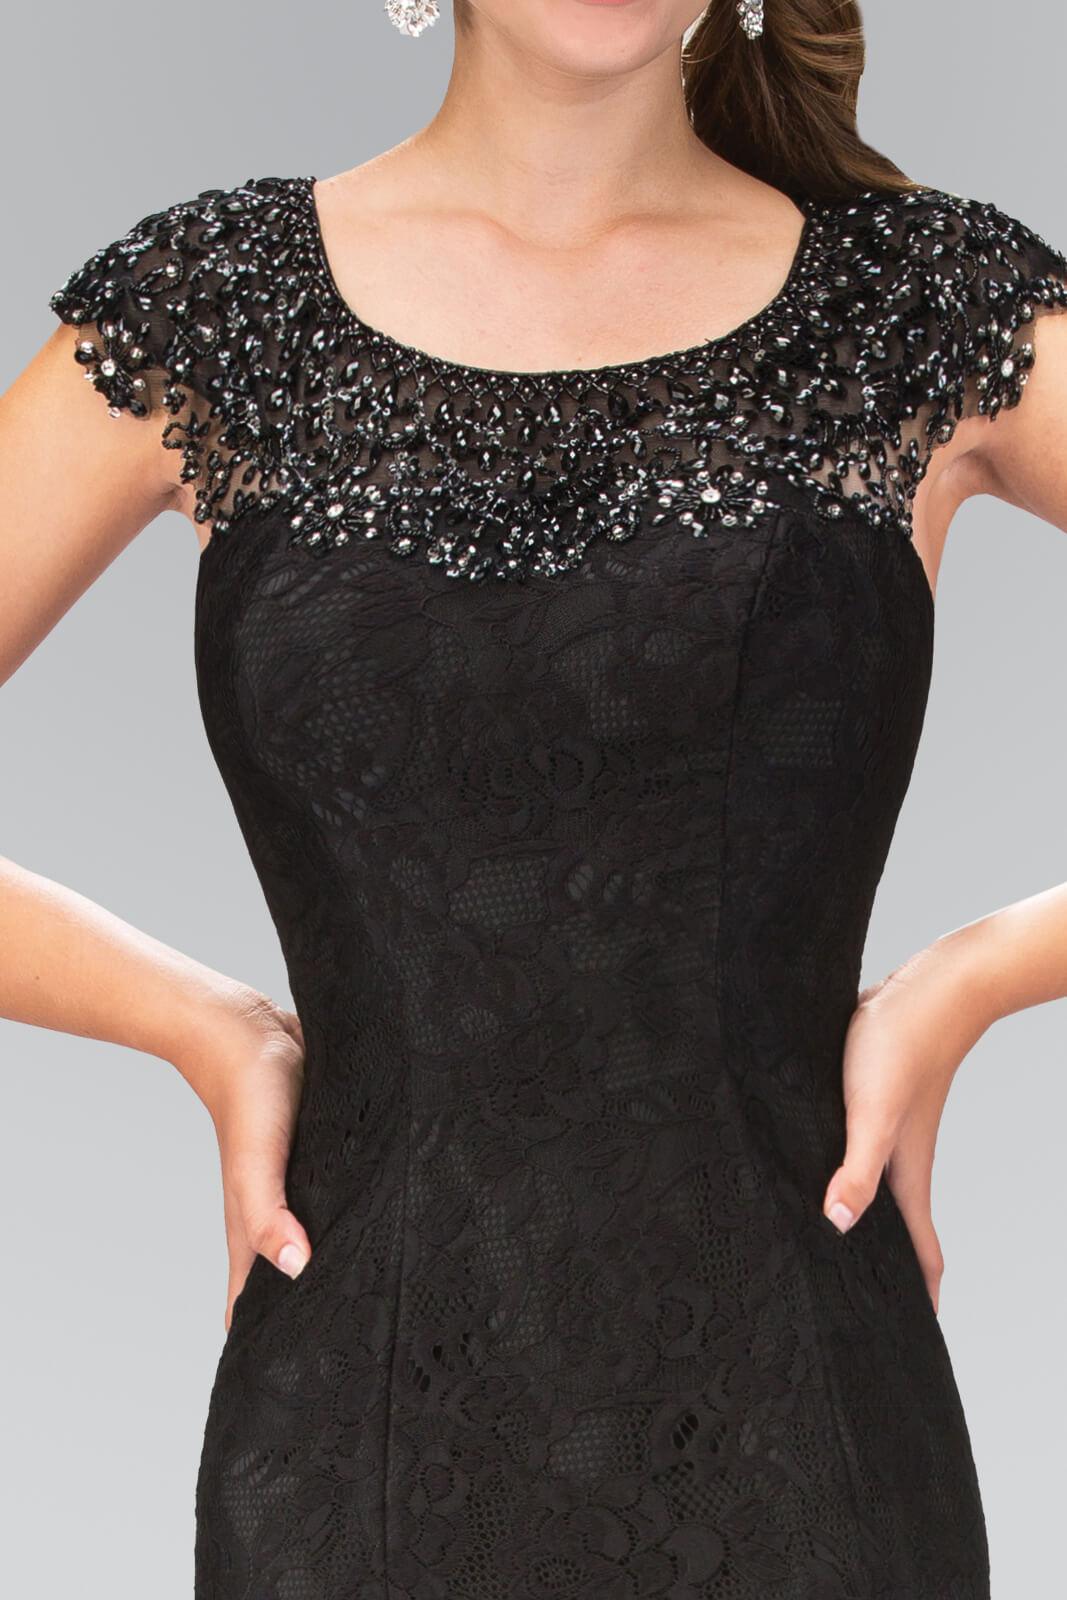 Long Prom Lace Dress Formal Evening Gown - The Dress Outlet Elizabeth K